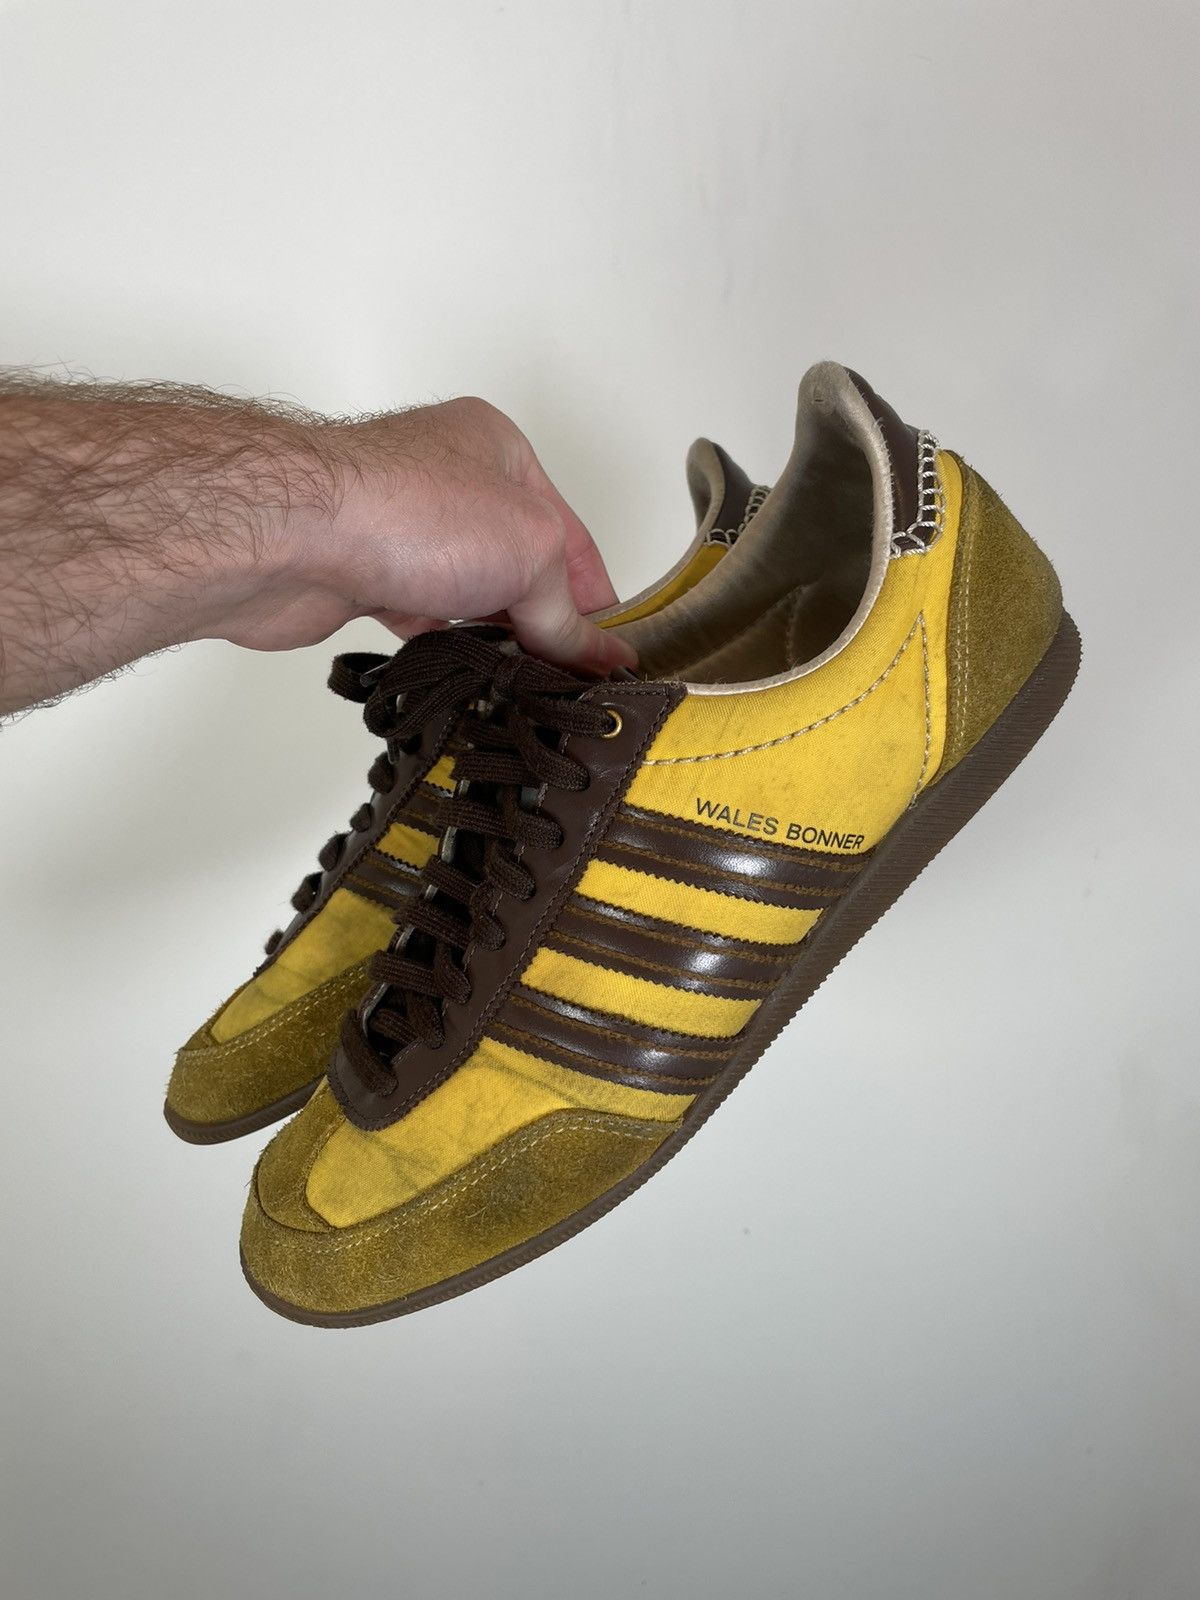 Adidas x Wales Bonner Japan Hazy Yellow Sneakers 9.5 | Grailed